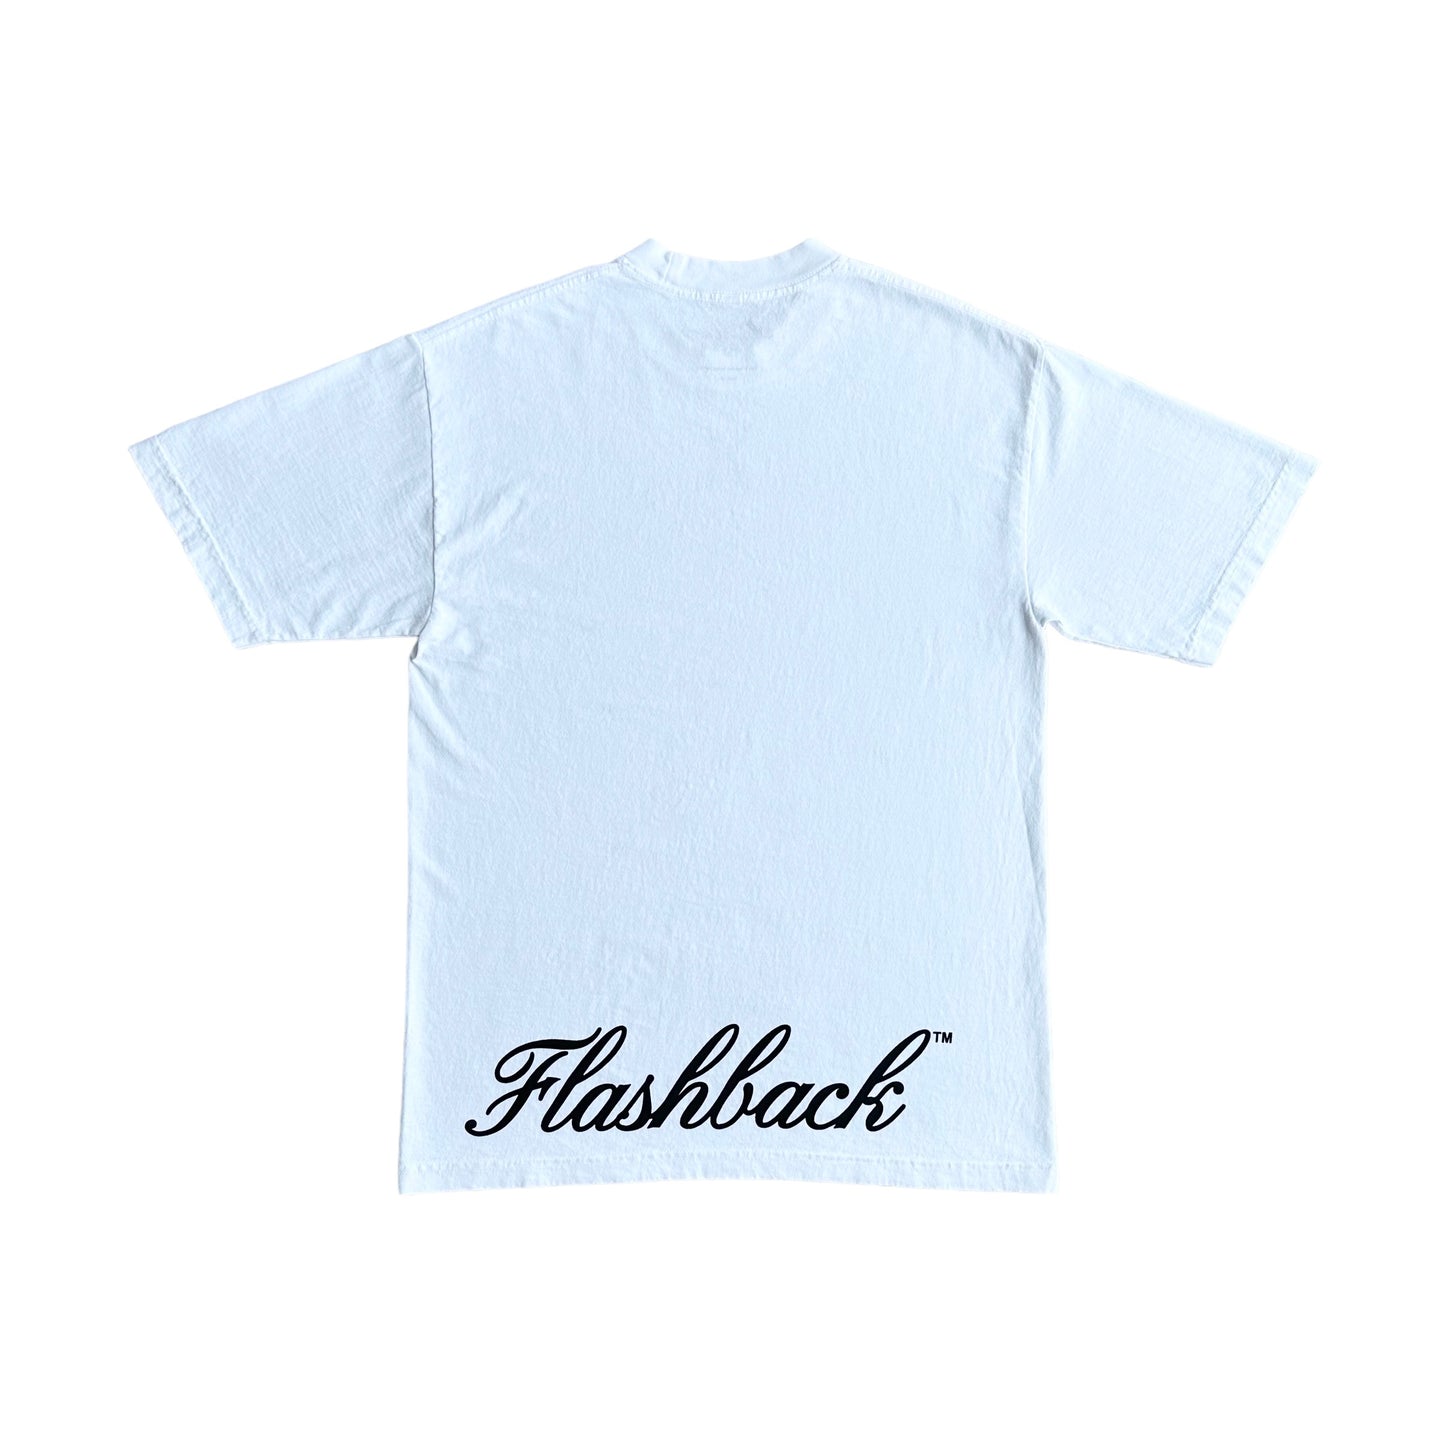 Flashback Logo Tee (White/Black)